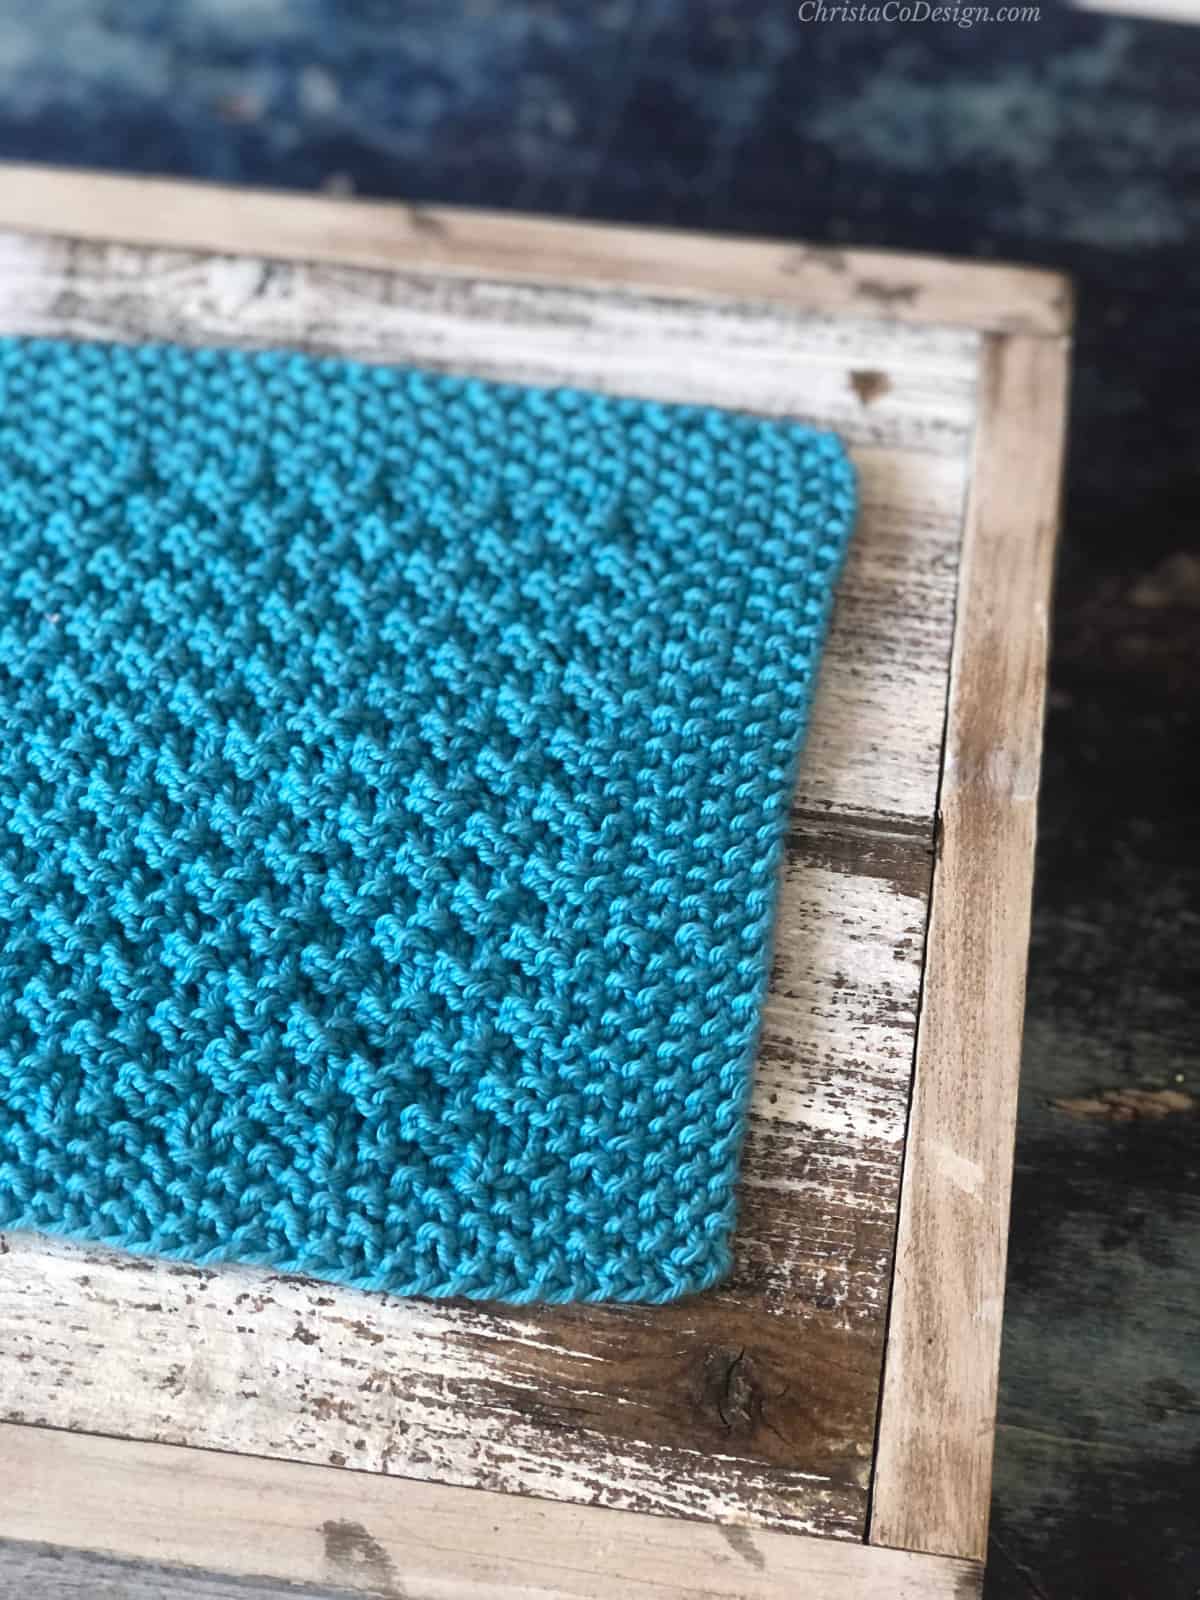 Seed stitch on border of blue knit dishcloth.